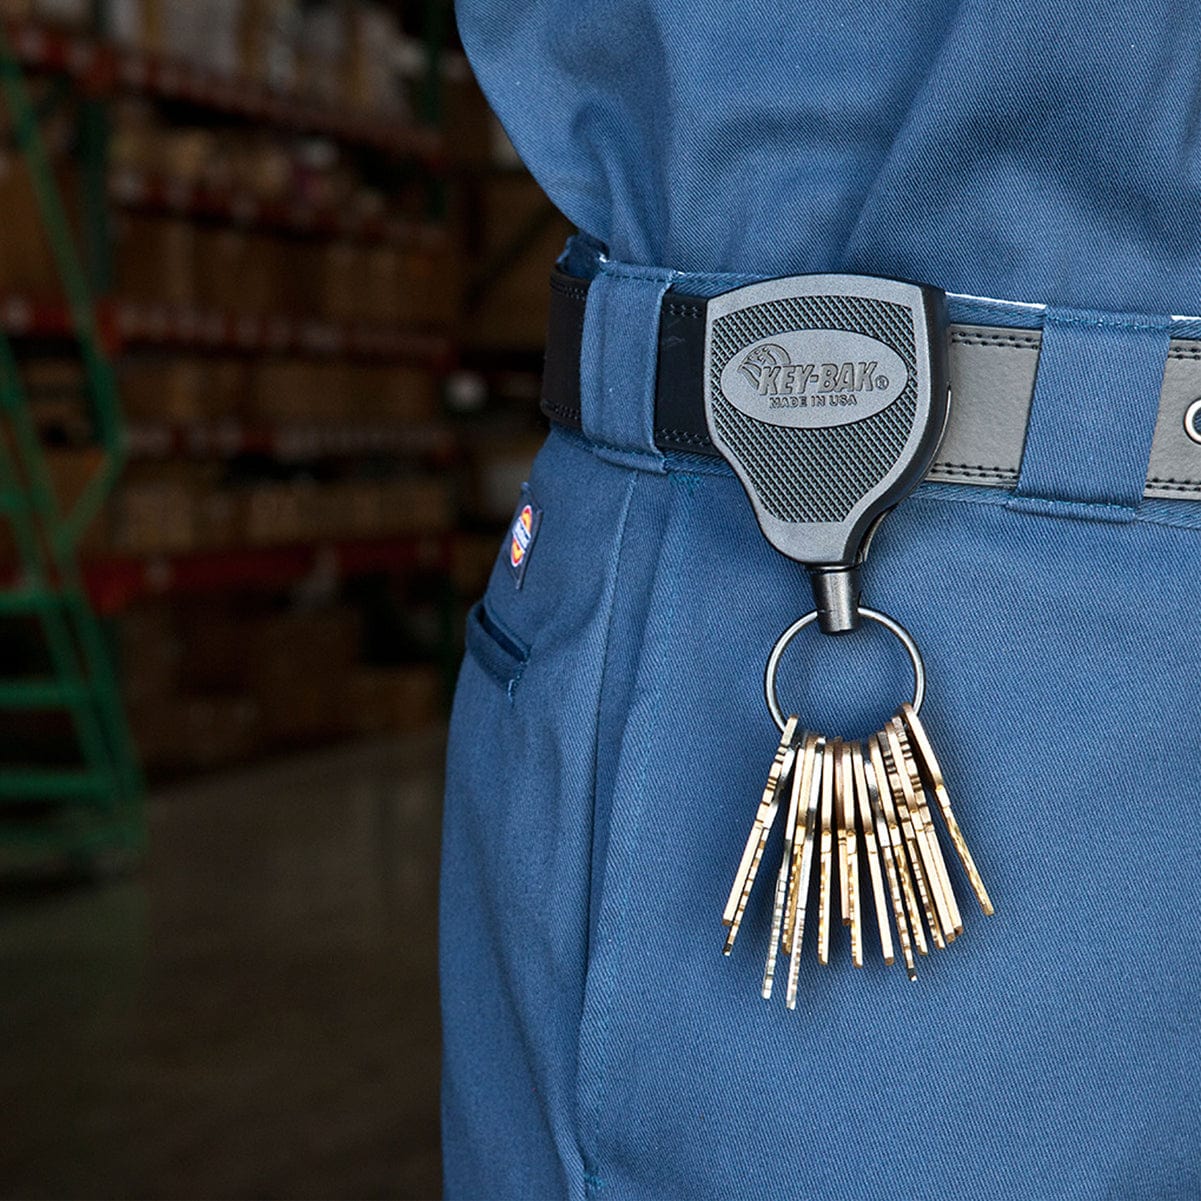 KeyBak Super48 Key Reels at the Best Price Guaranteed! KeyBak Super48 Reel  is Made in